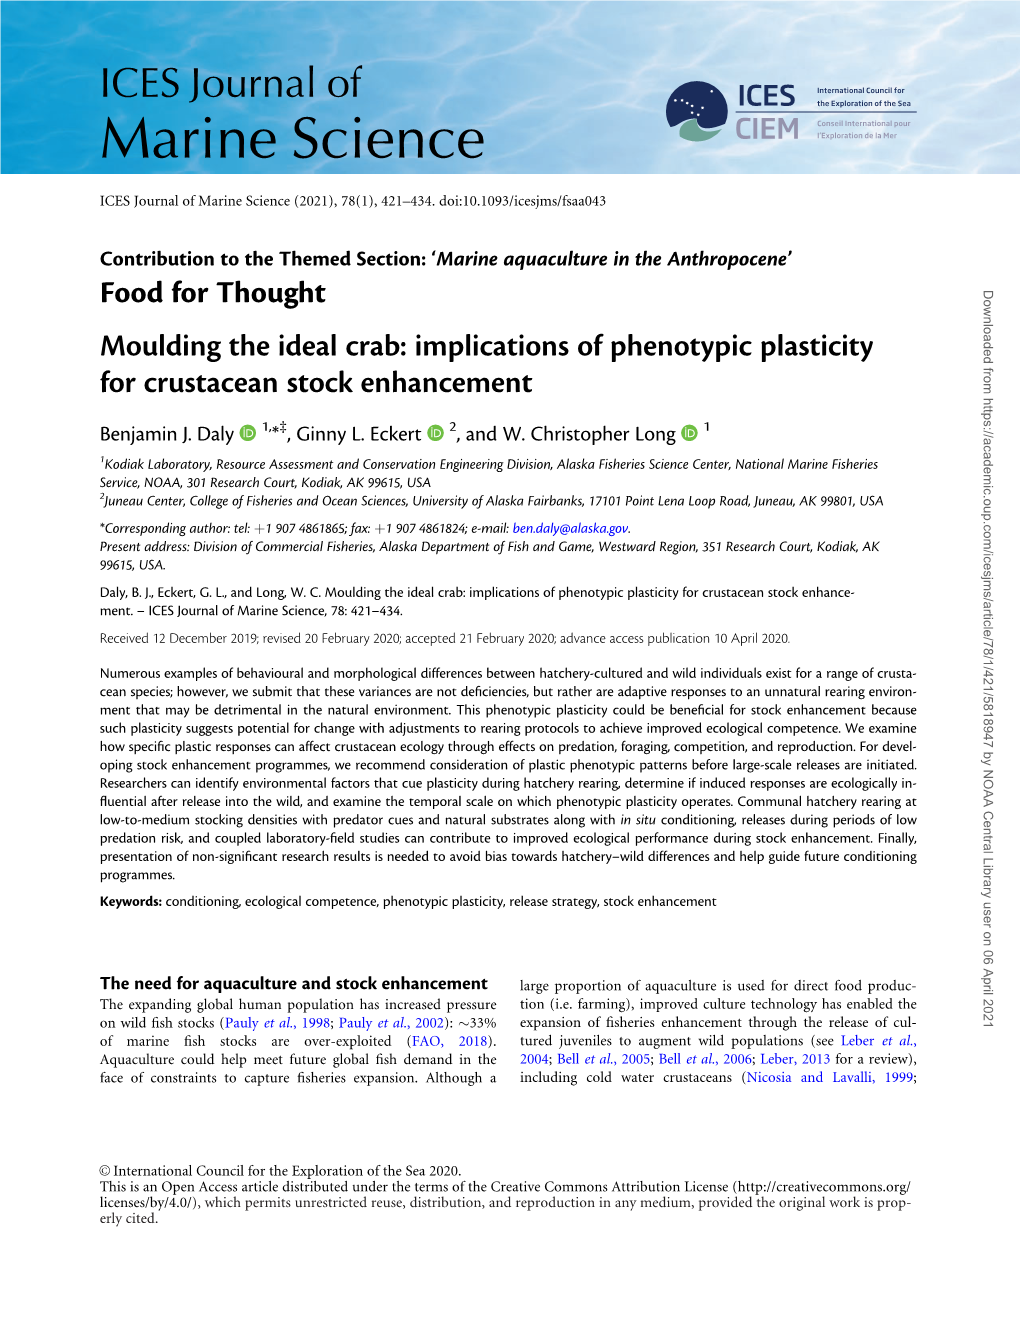 Implications of Phenotypic Plasticity for Crustacean Stock Enhancement